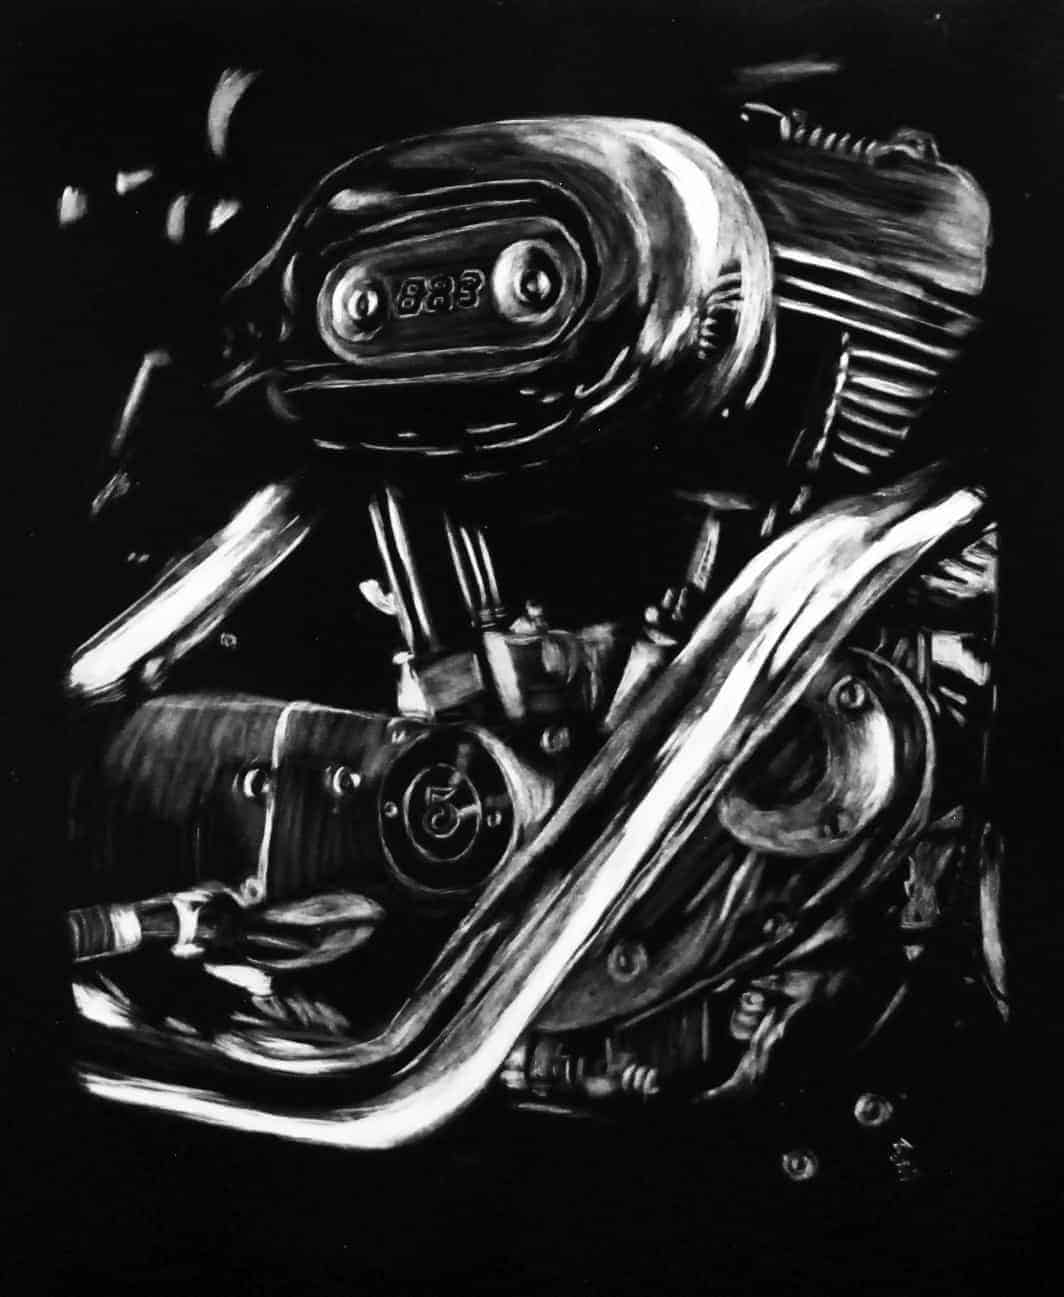 Harley 103 V-Twin engine